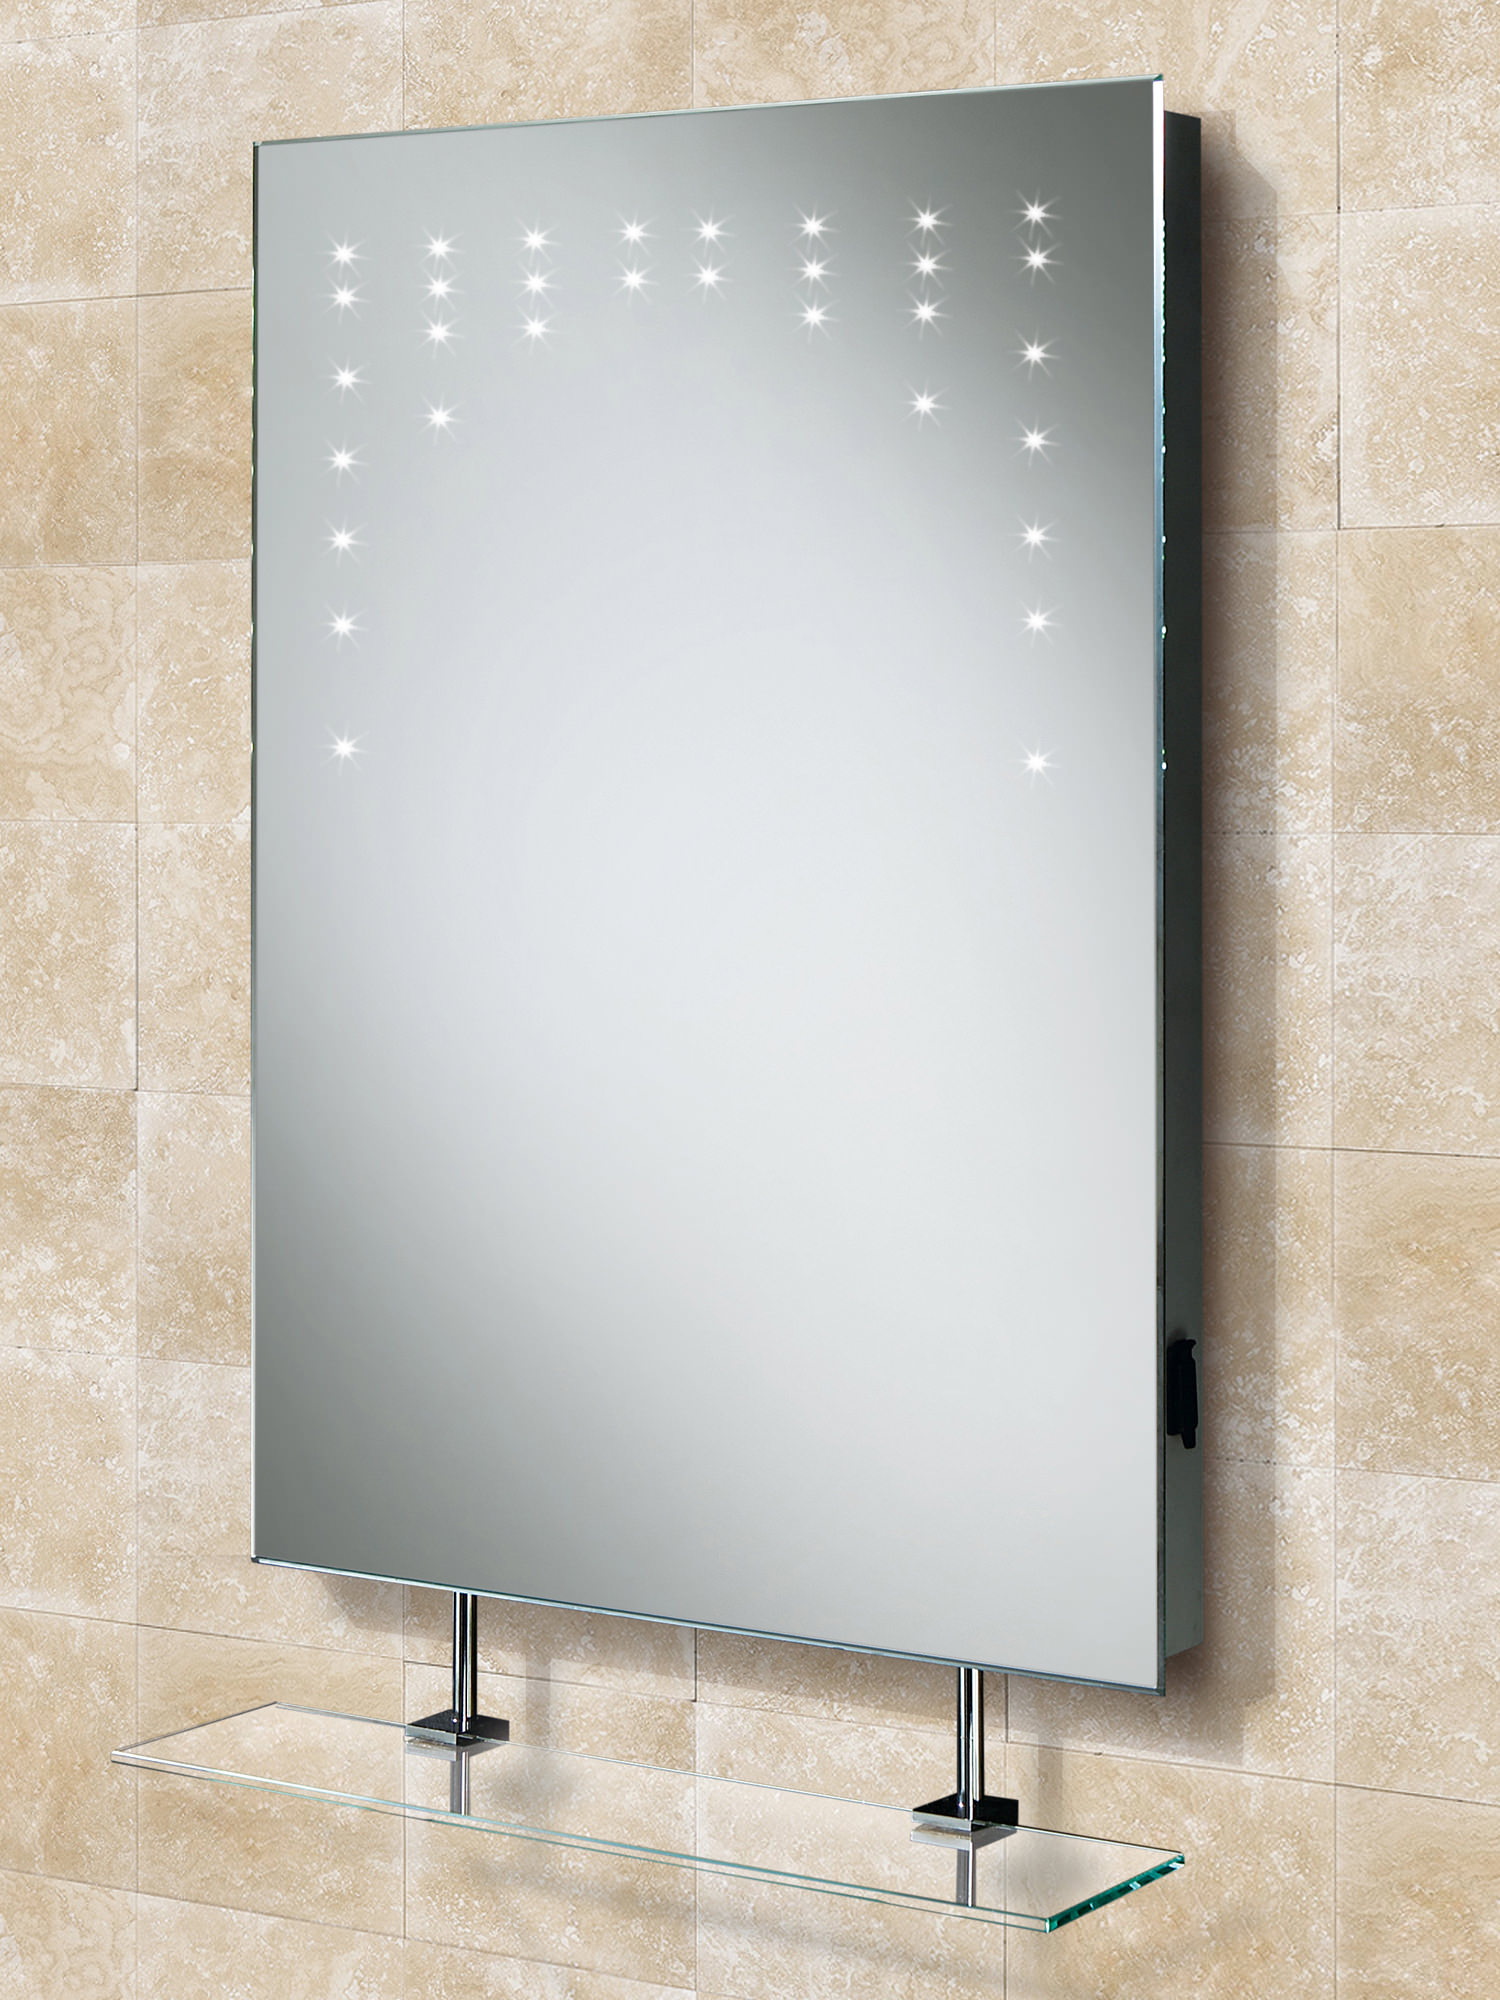 HIB Rain LED Bathroom Mirror With Glass Shelf And Shaver ...